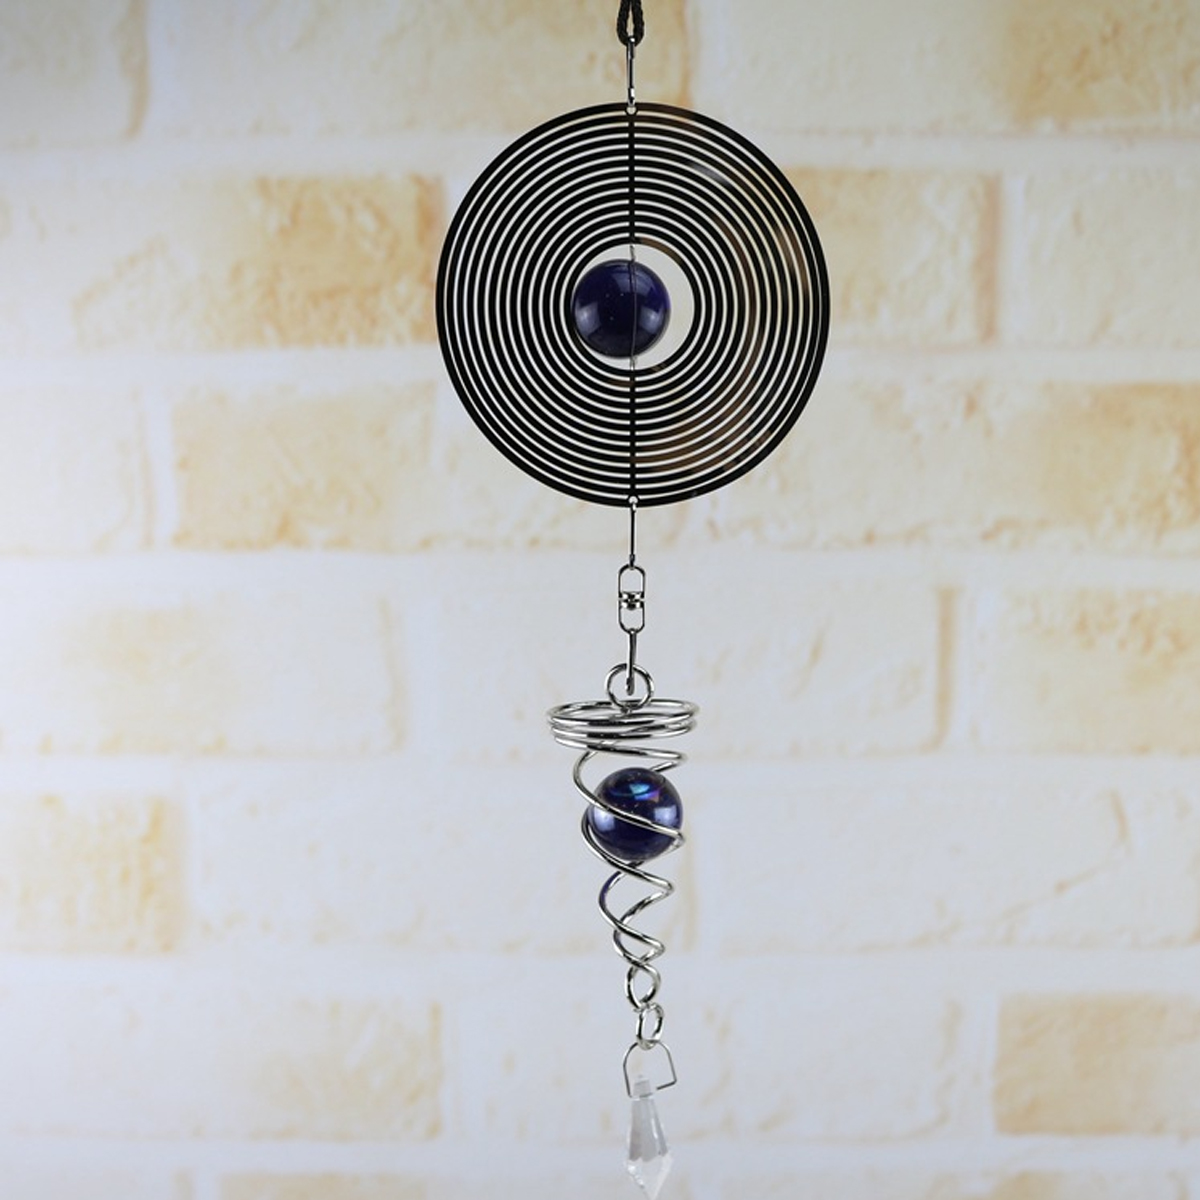 Metal-Hanging-Garden-Wind-Spinner-Round-Crystal-Ball-Bell-Garden-Home-Ornament-1682662-4